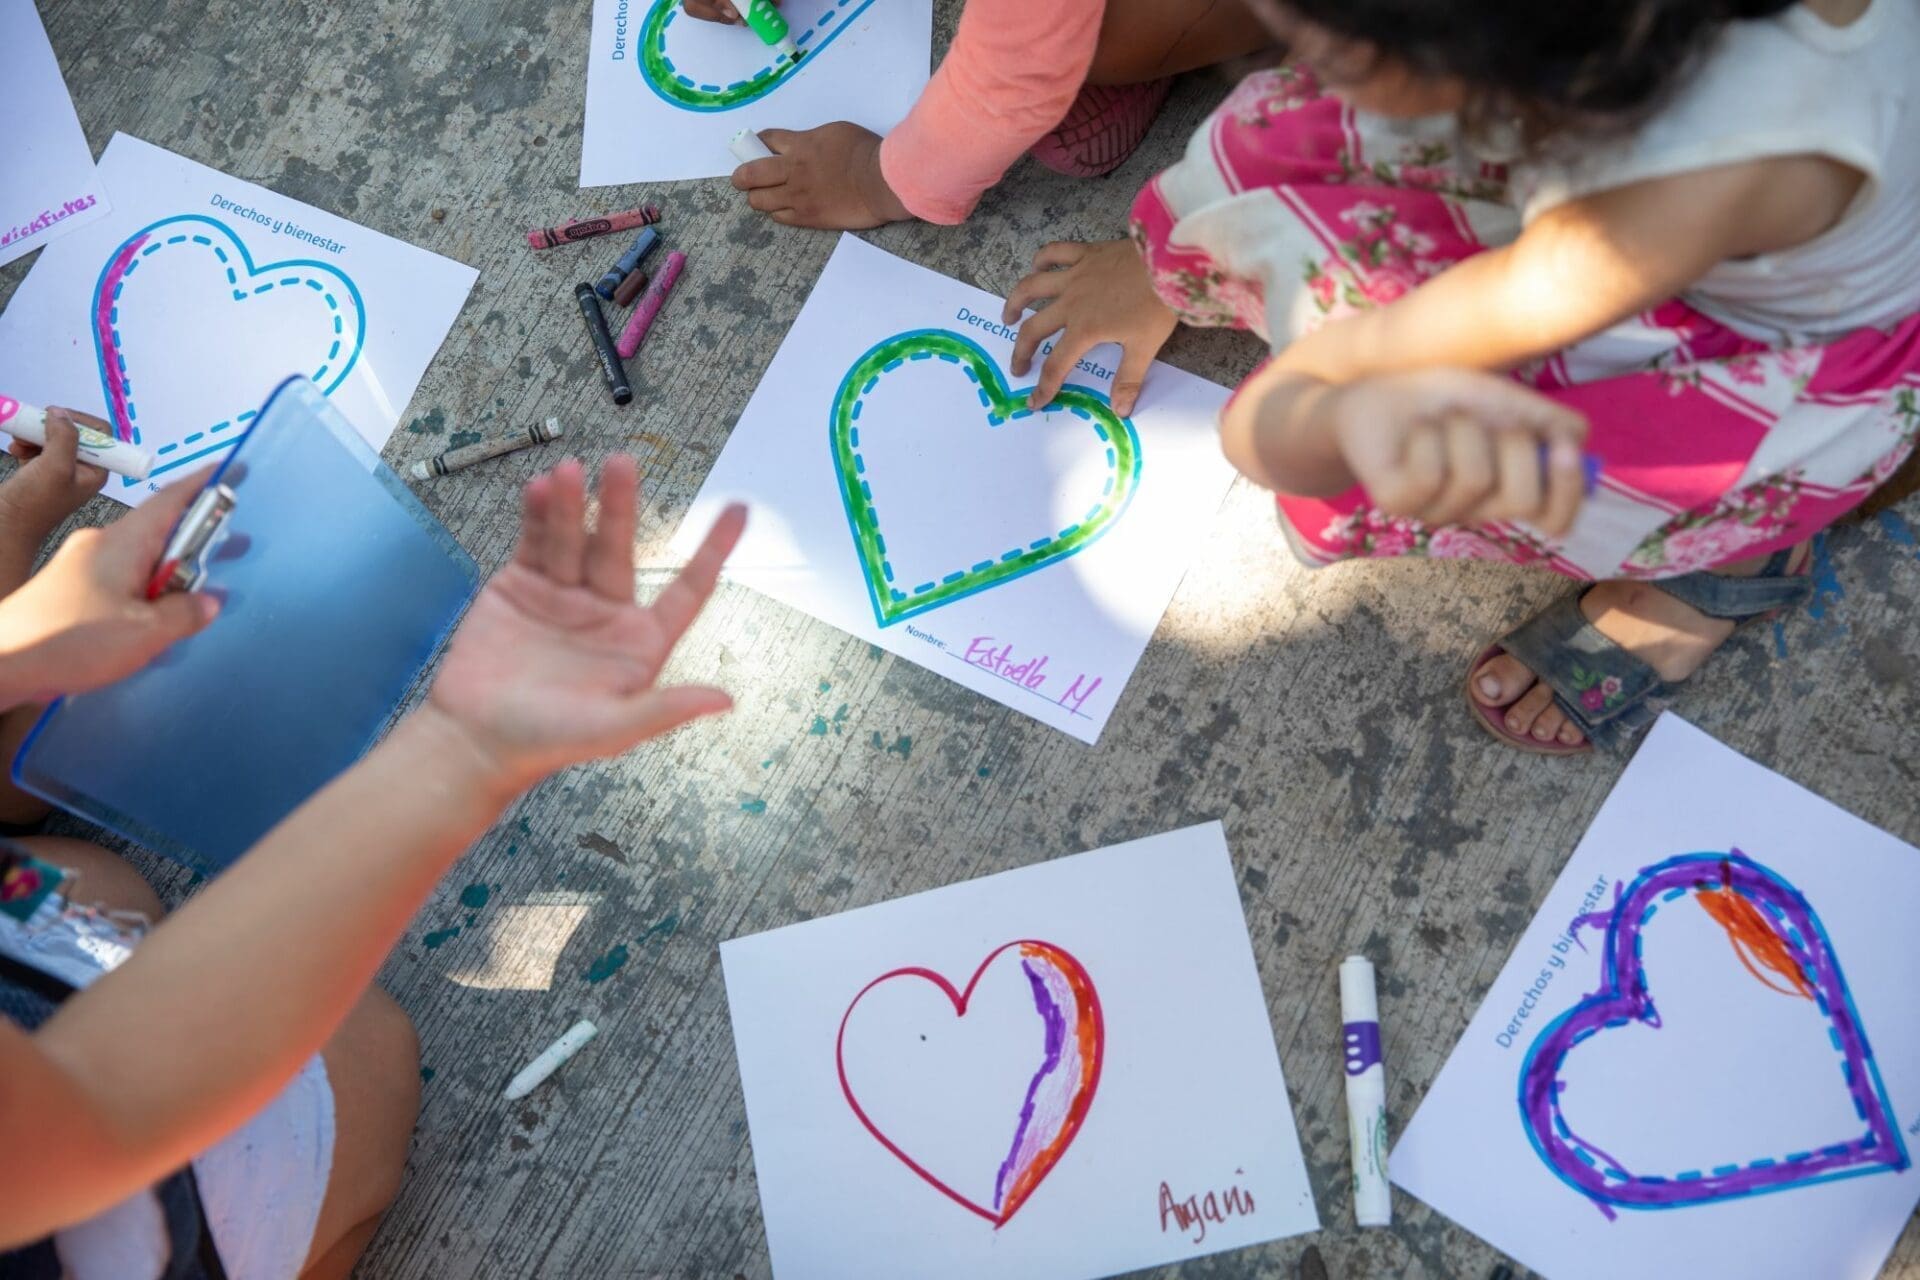 children at an art workshop in Tapachula. Photo by Brett Gundlock